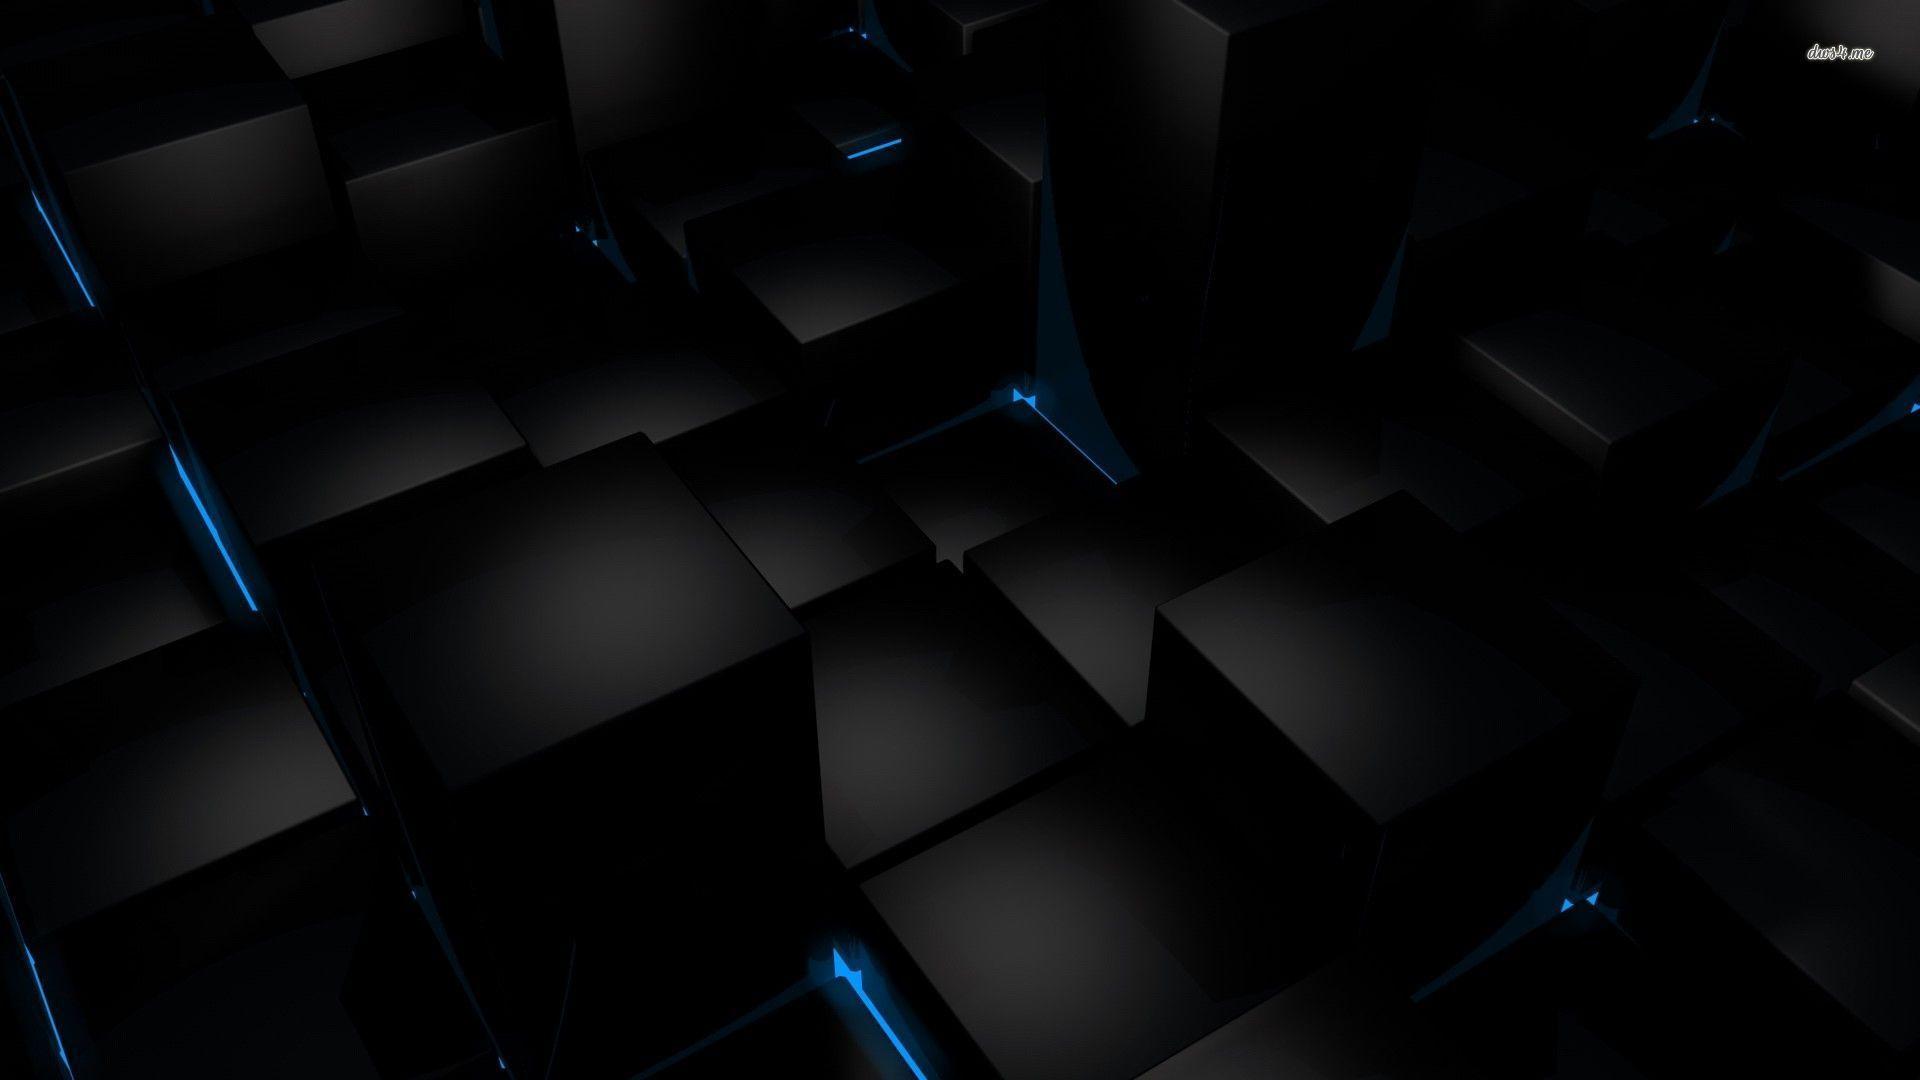 Dark Geometric Desktop Wallpaper